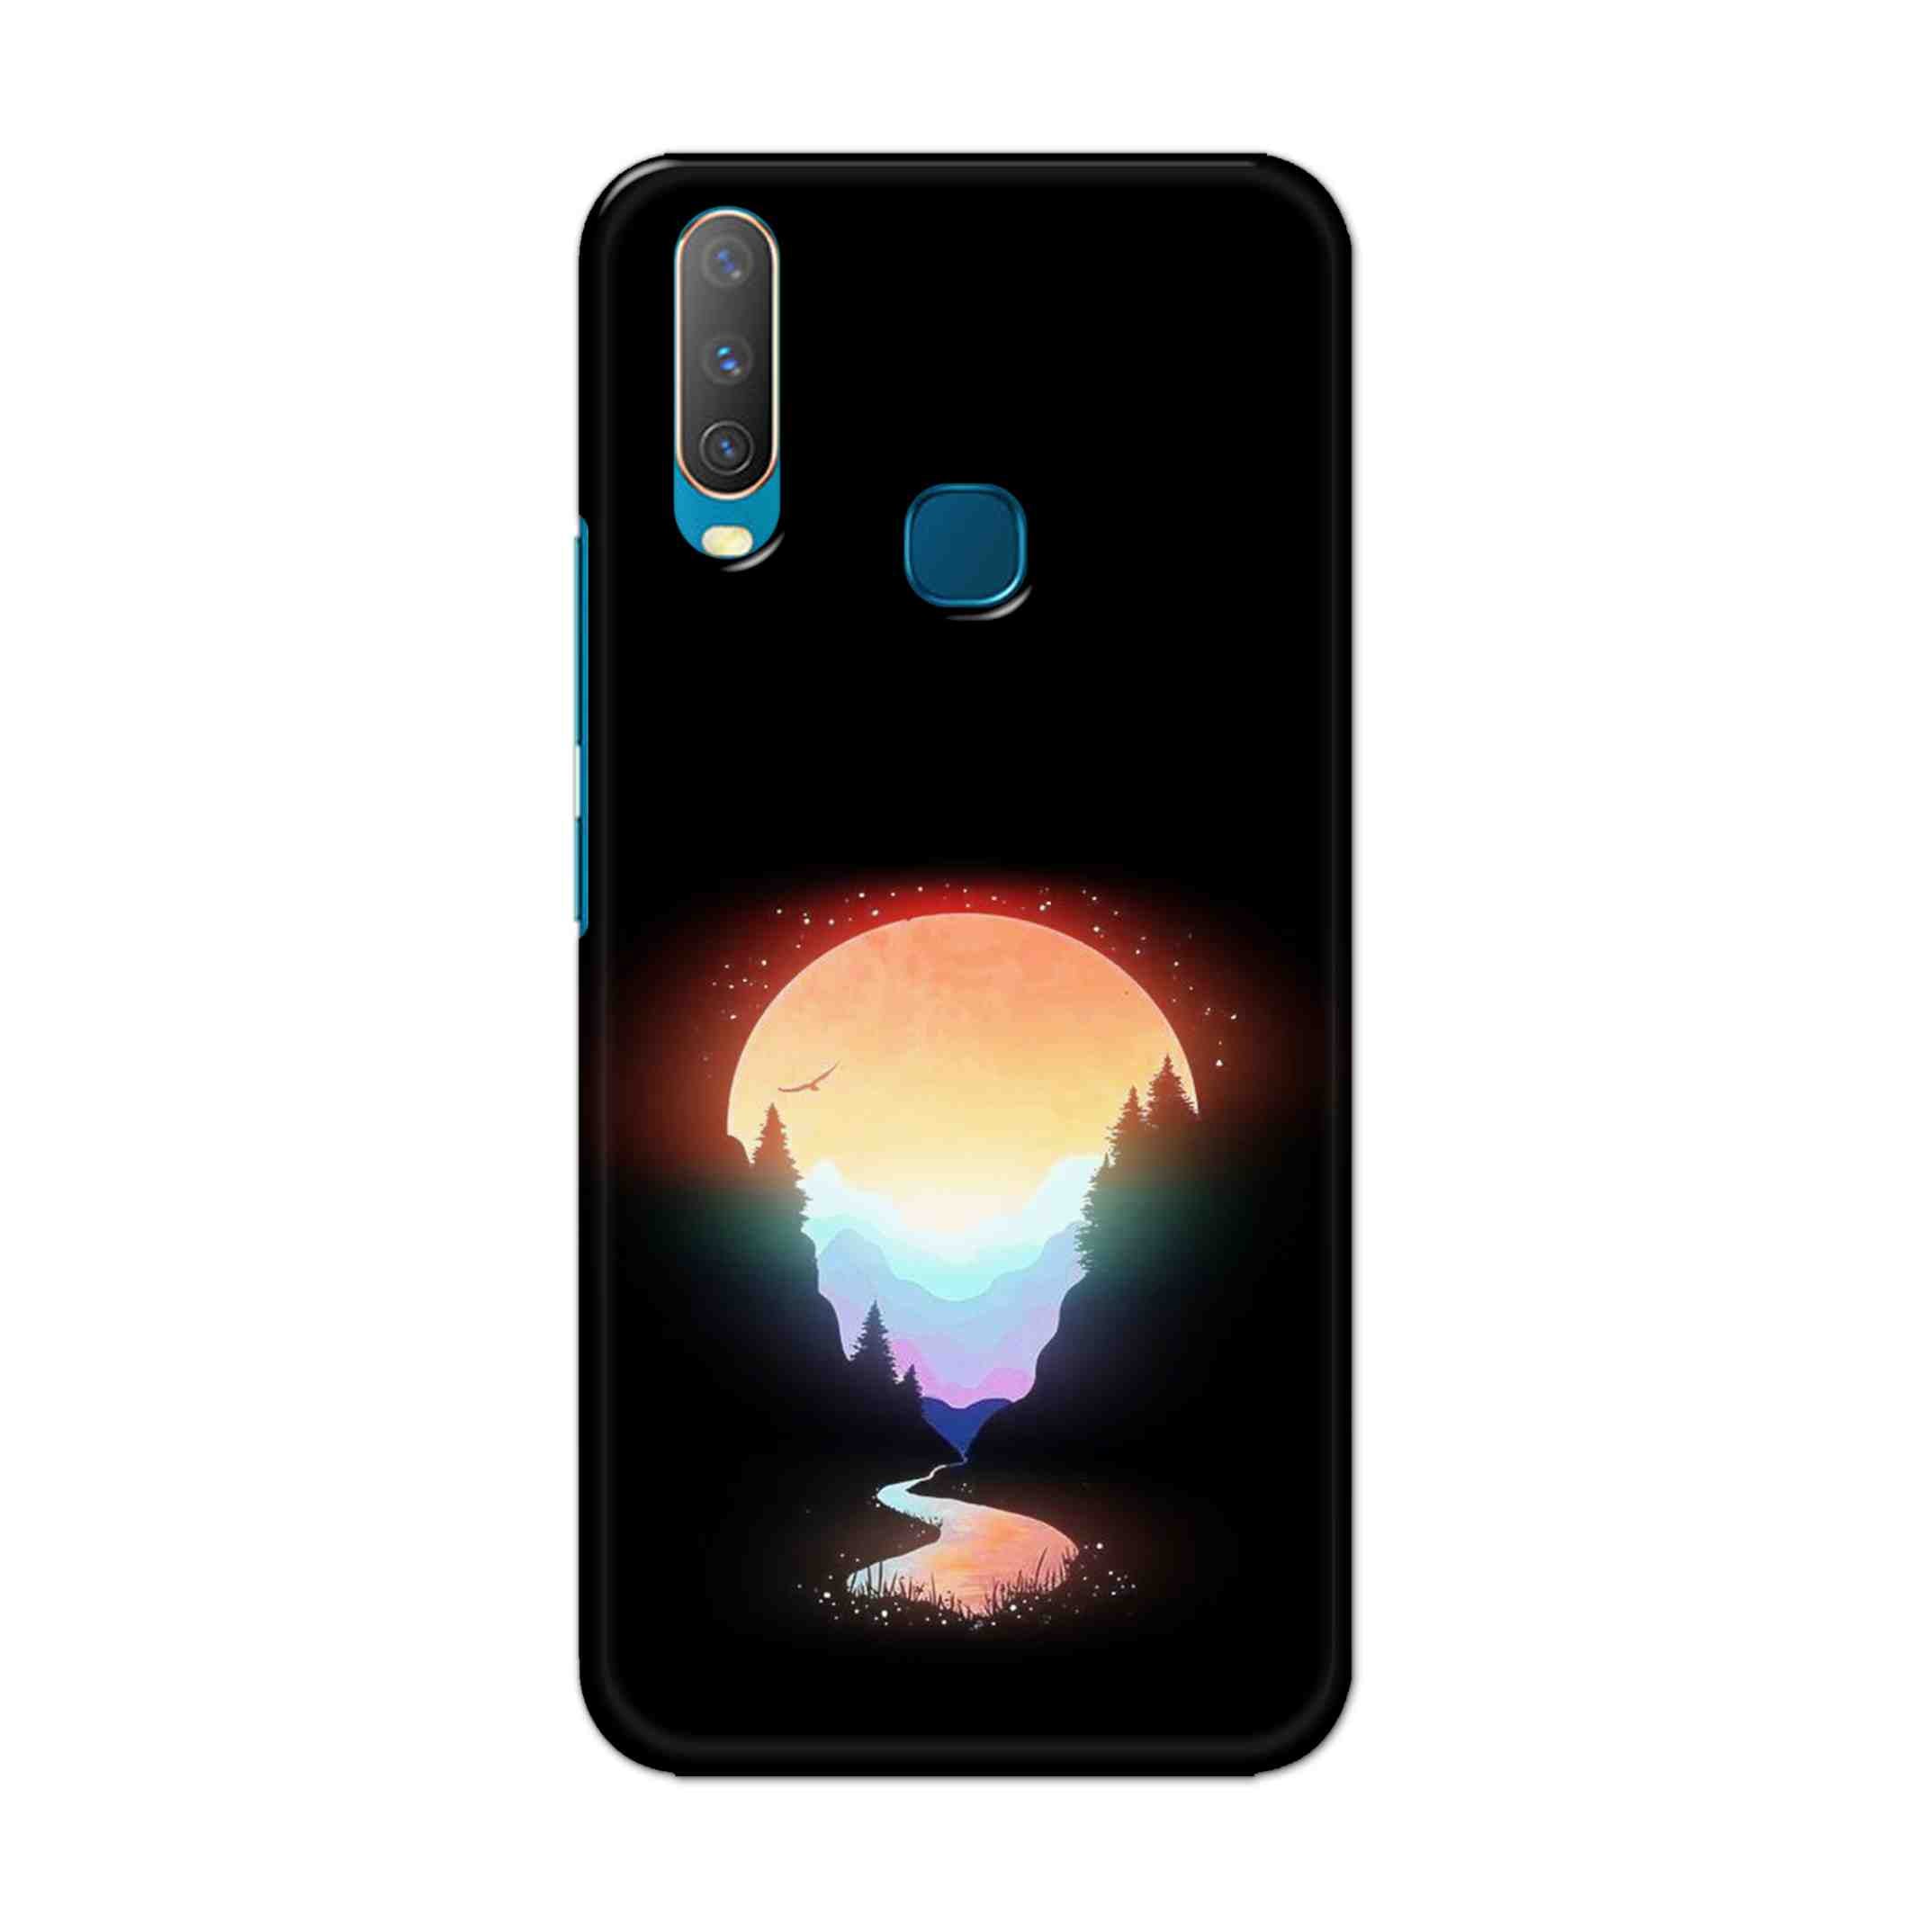 Buy Rainbow Hard Back Mobile Phone Case Cover For Vivo Y17 / U10 Online